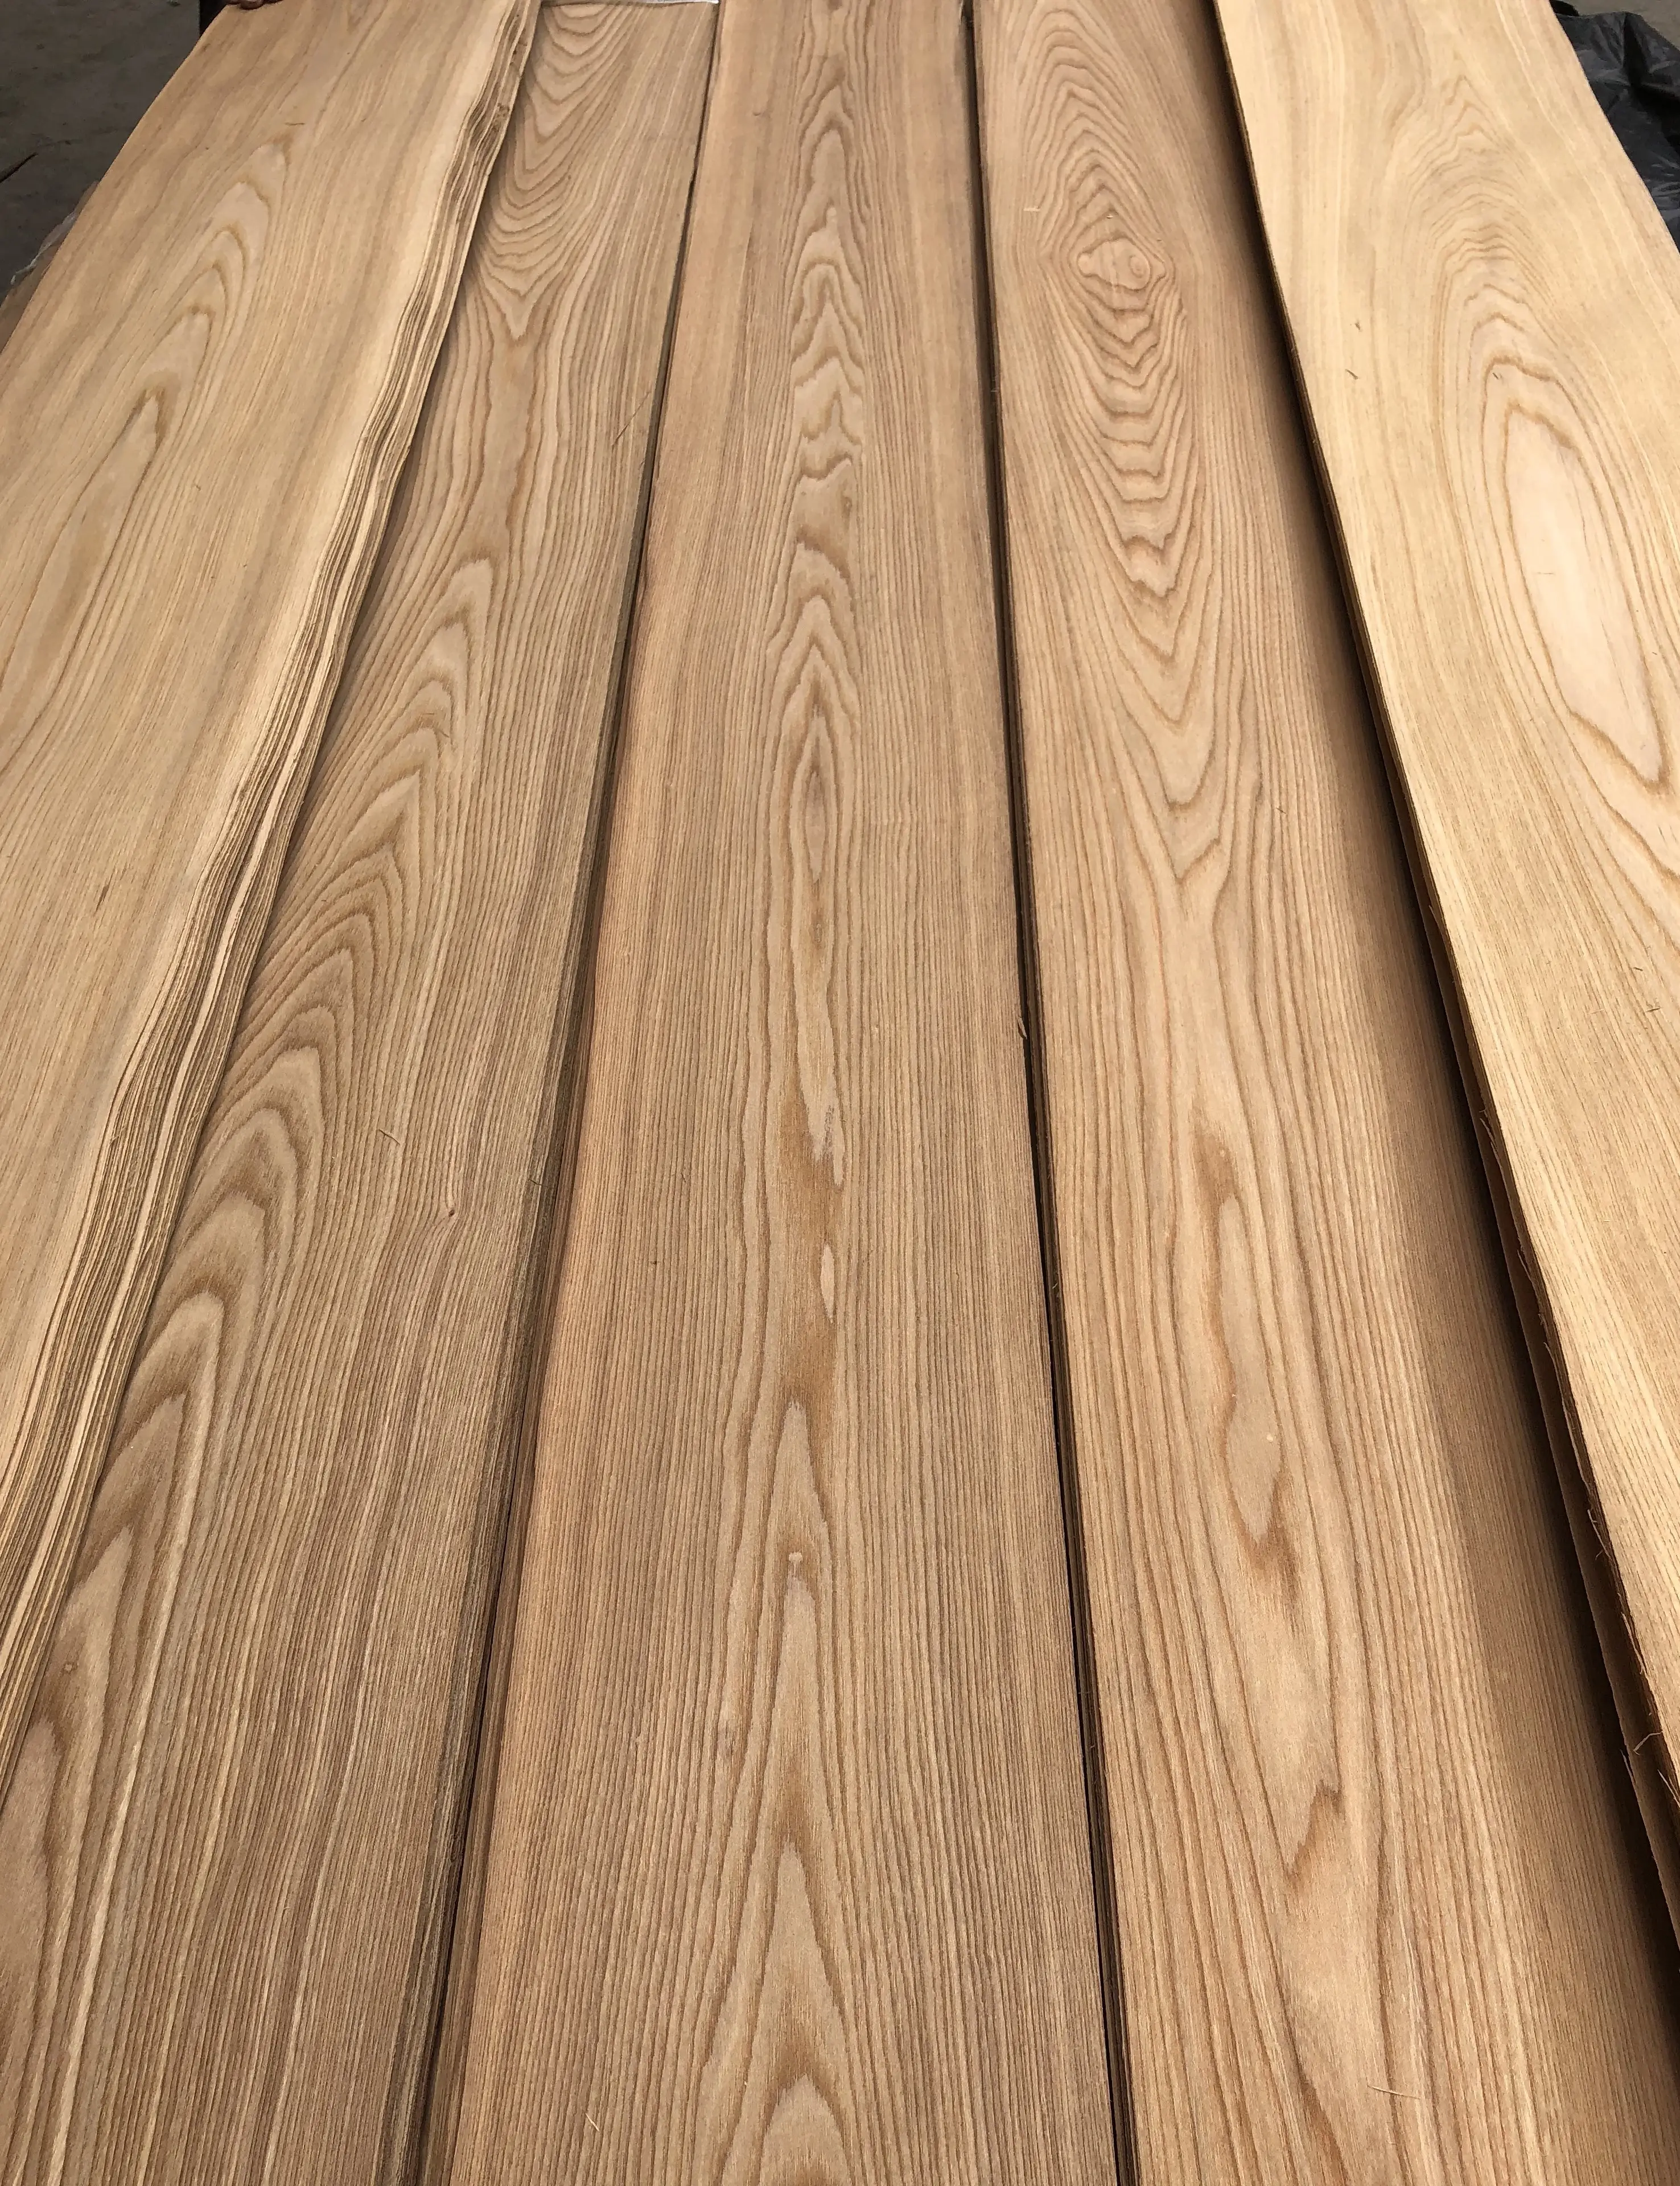 Grosir kayu Veneer Elm alami biji-bijian gunung/lurus kayu Elm alami 0.4mm lantai kayu lapis Veneer